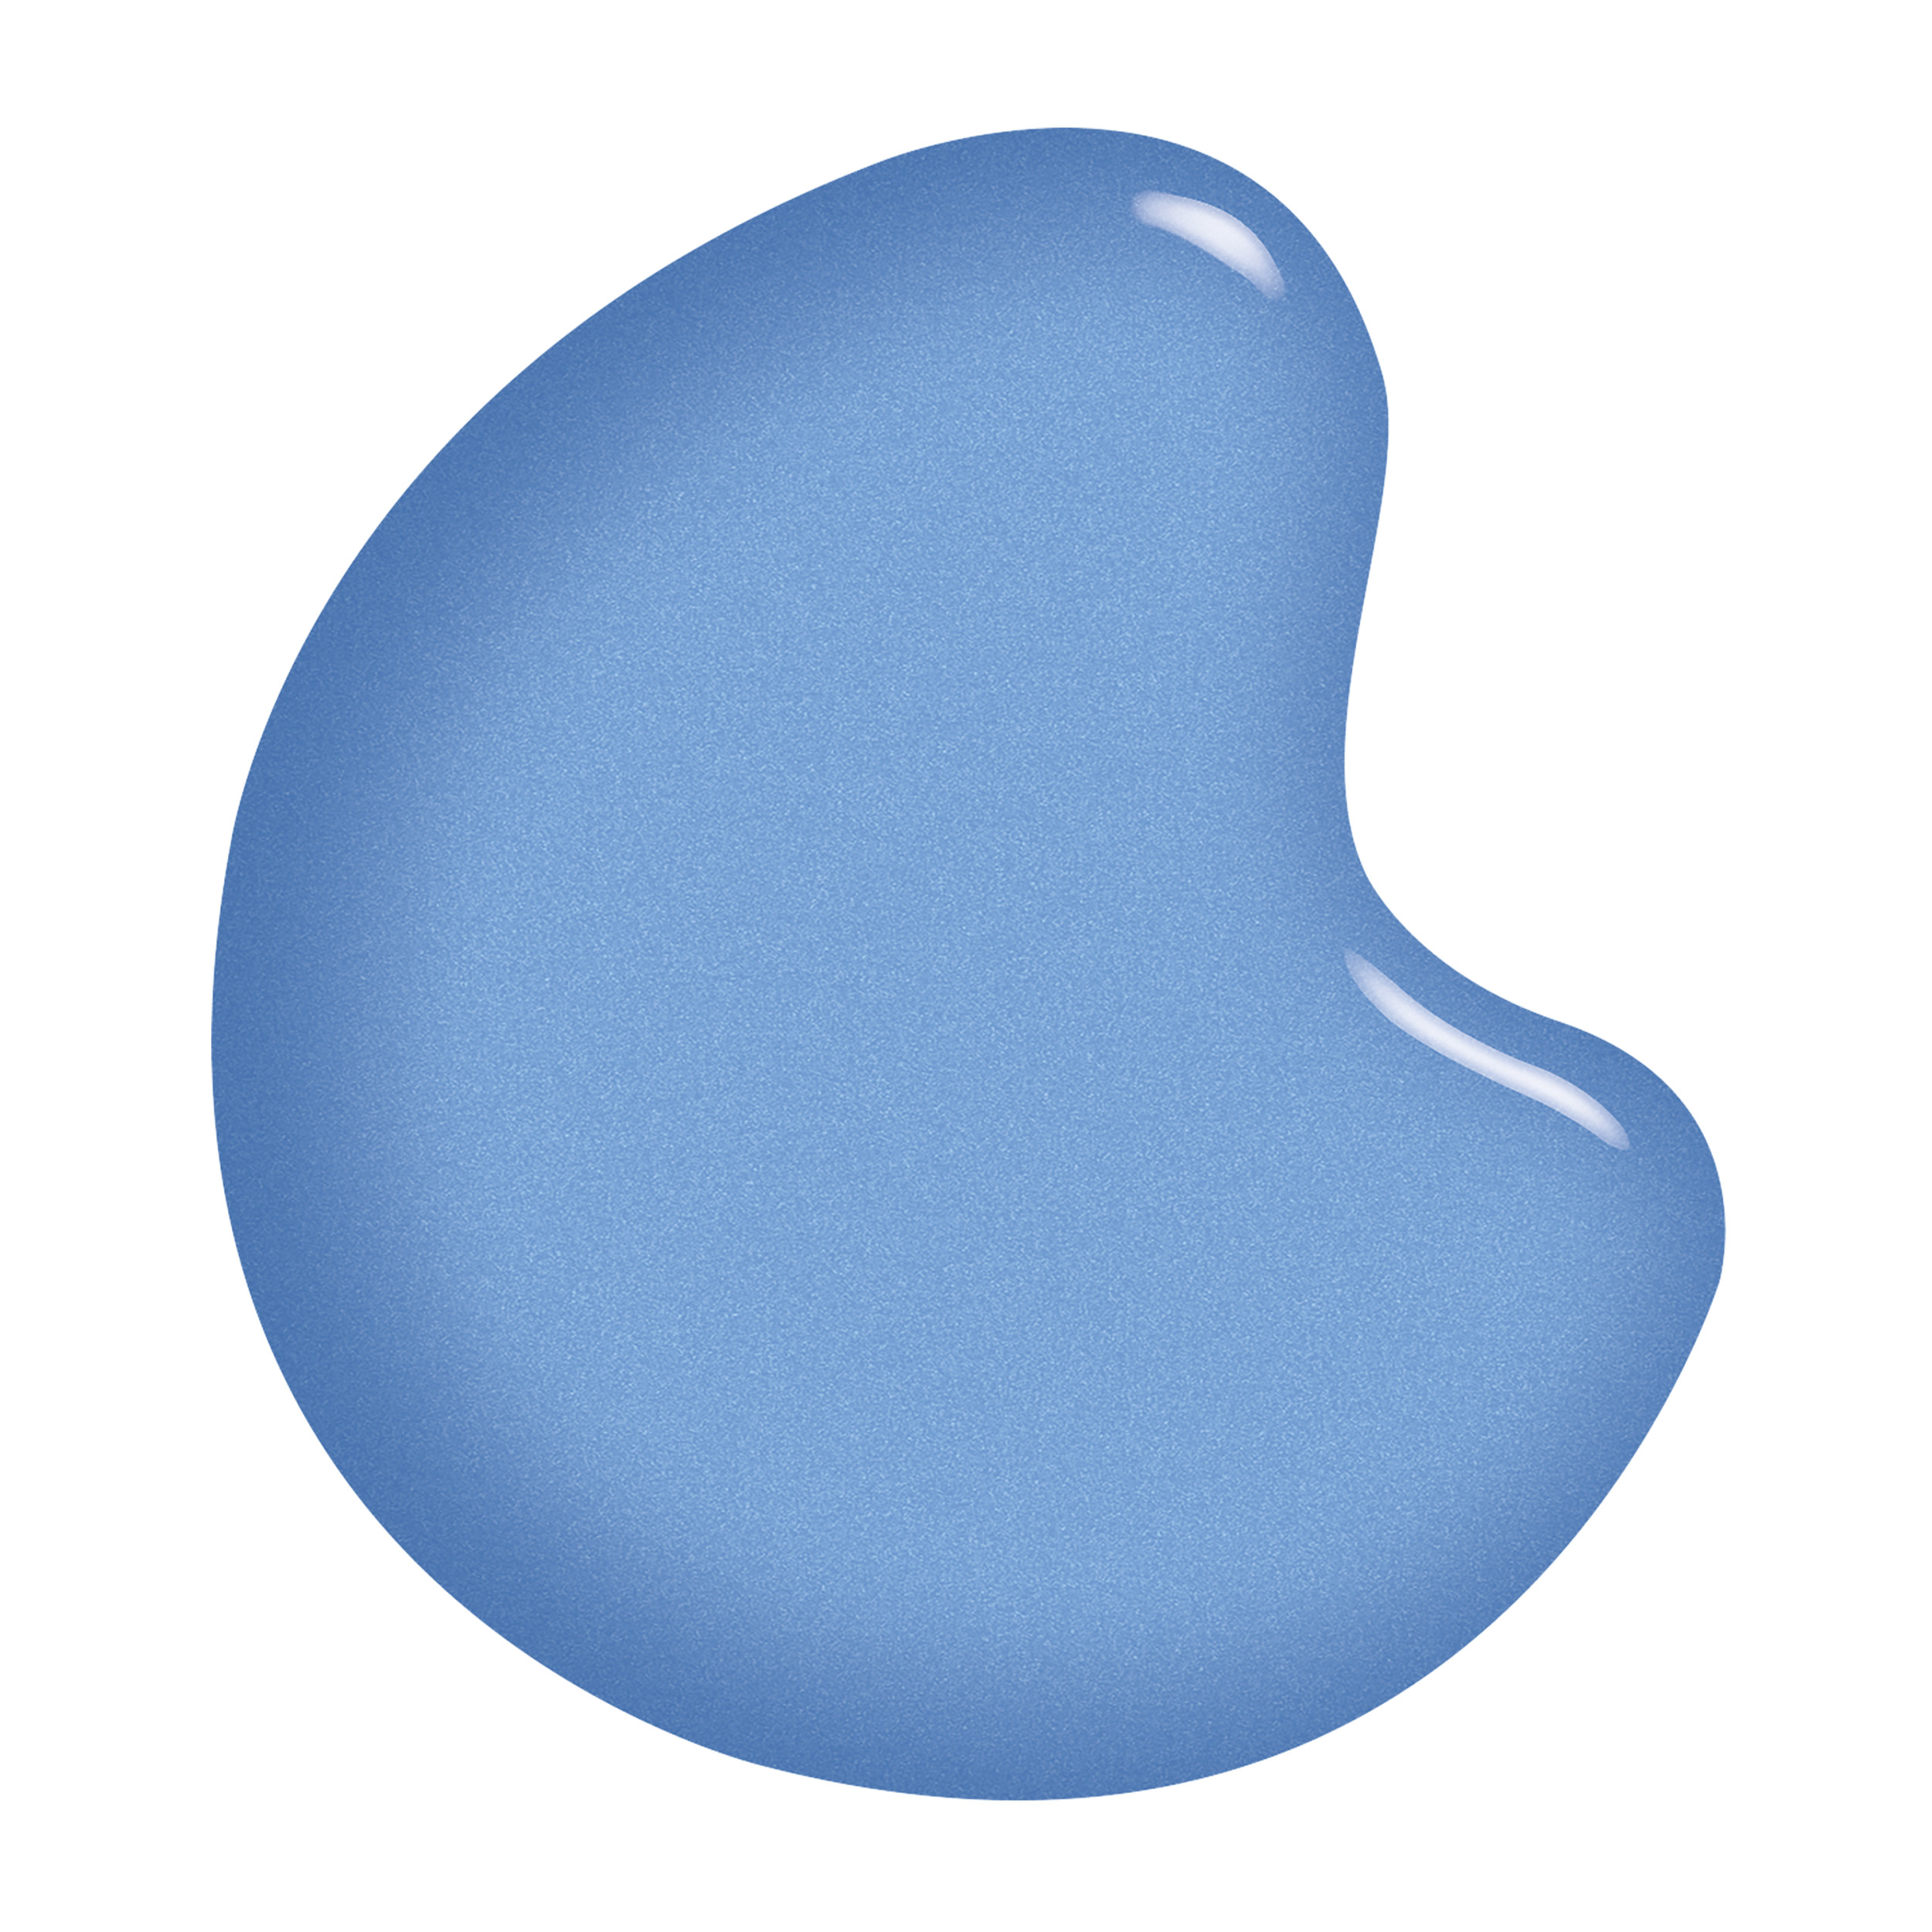 Sally Hansen Xtreme Wear Nail Polish, Babe Blue, 0.4 fl oz, Chip Resistant, Bold Color - image 3 of 14